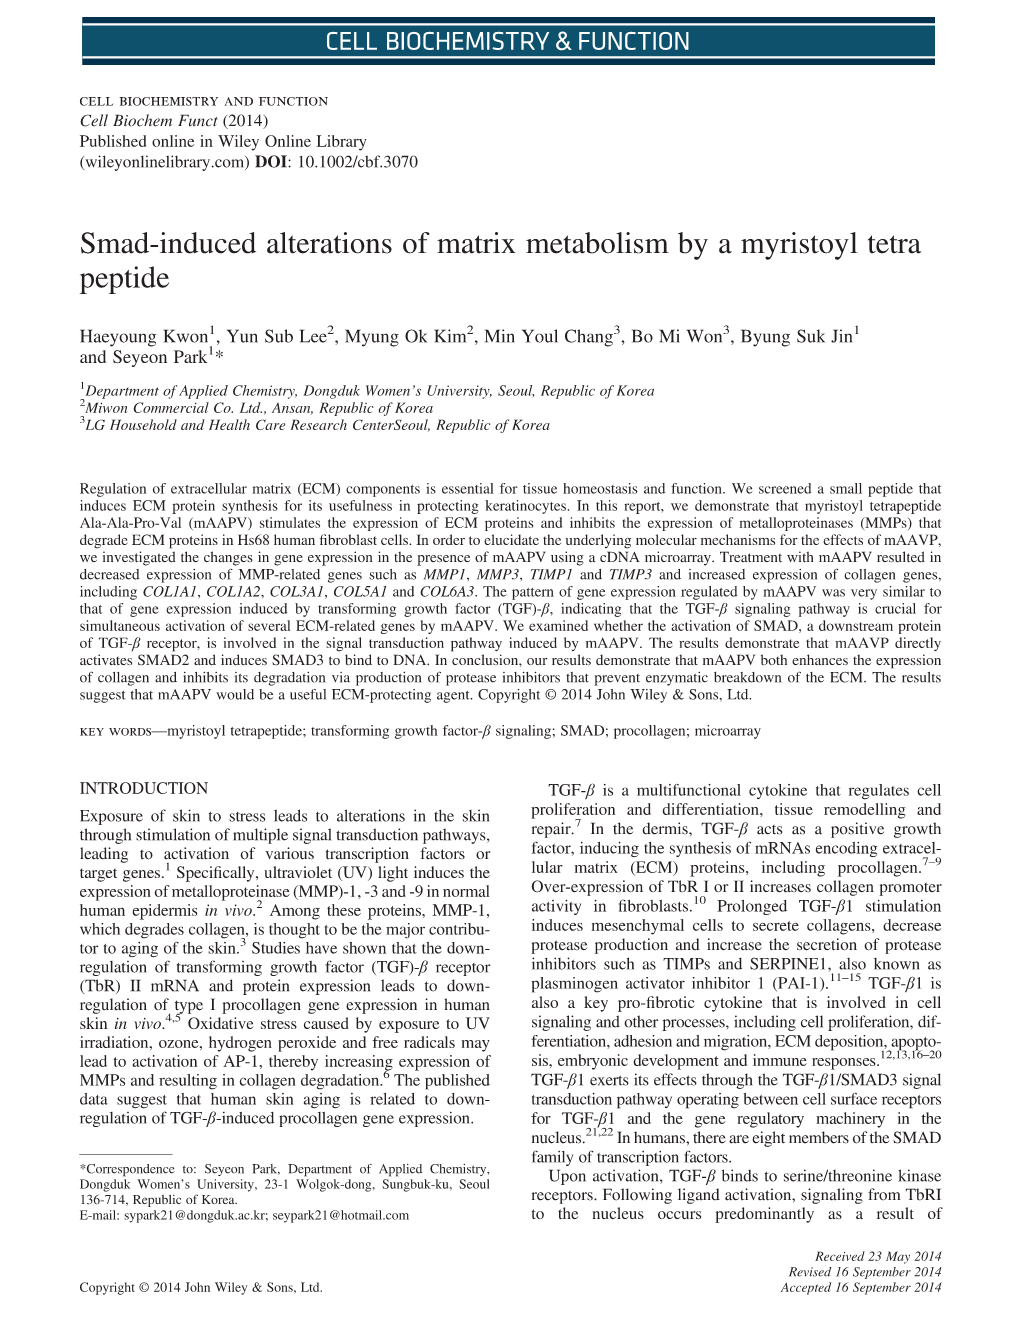 Smadinduced Alterations of Matrix Metabolism by a Myristoyl Tetra